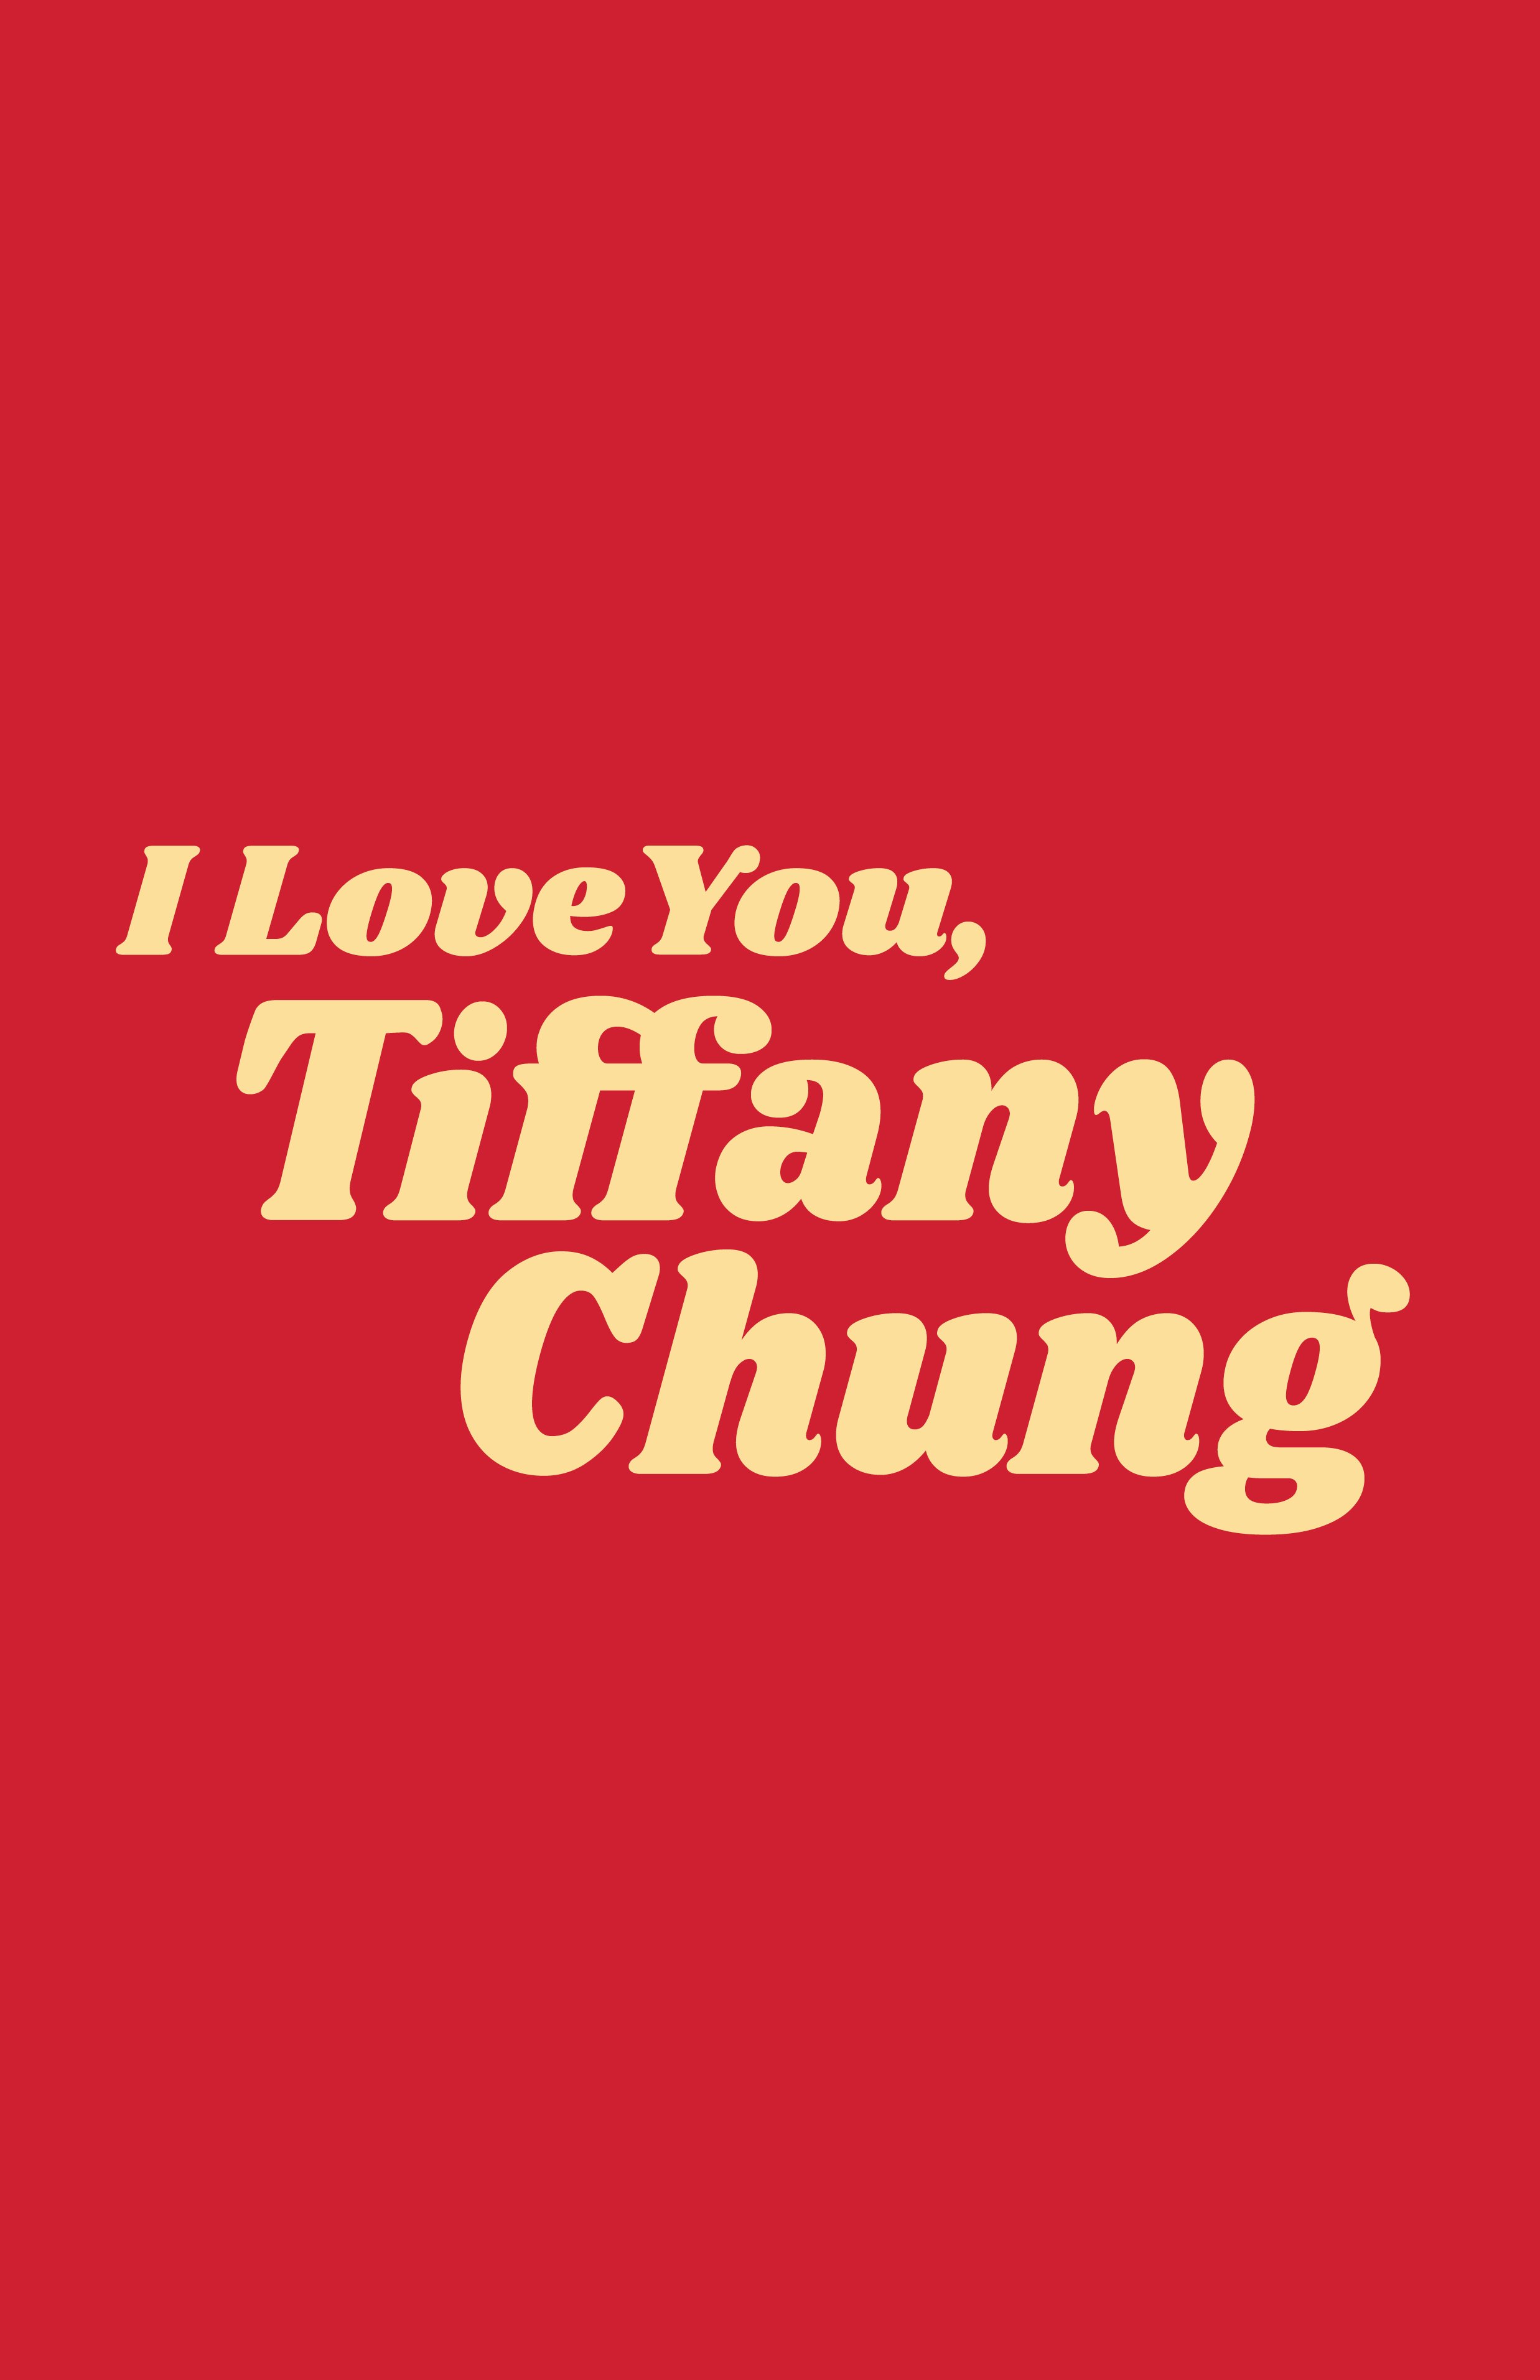 ILYTiffany Chung - Complete5.jpg